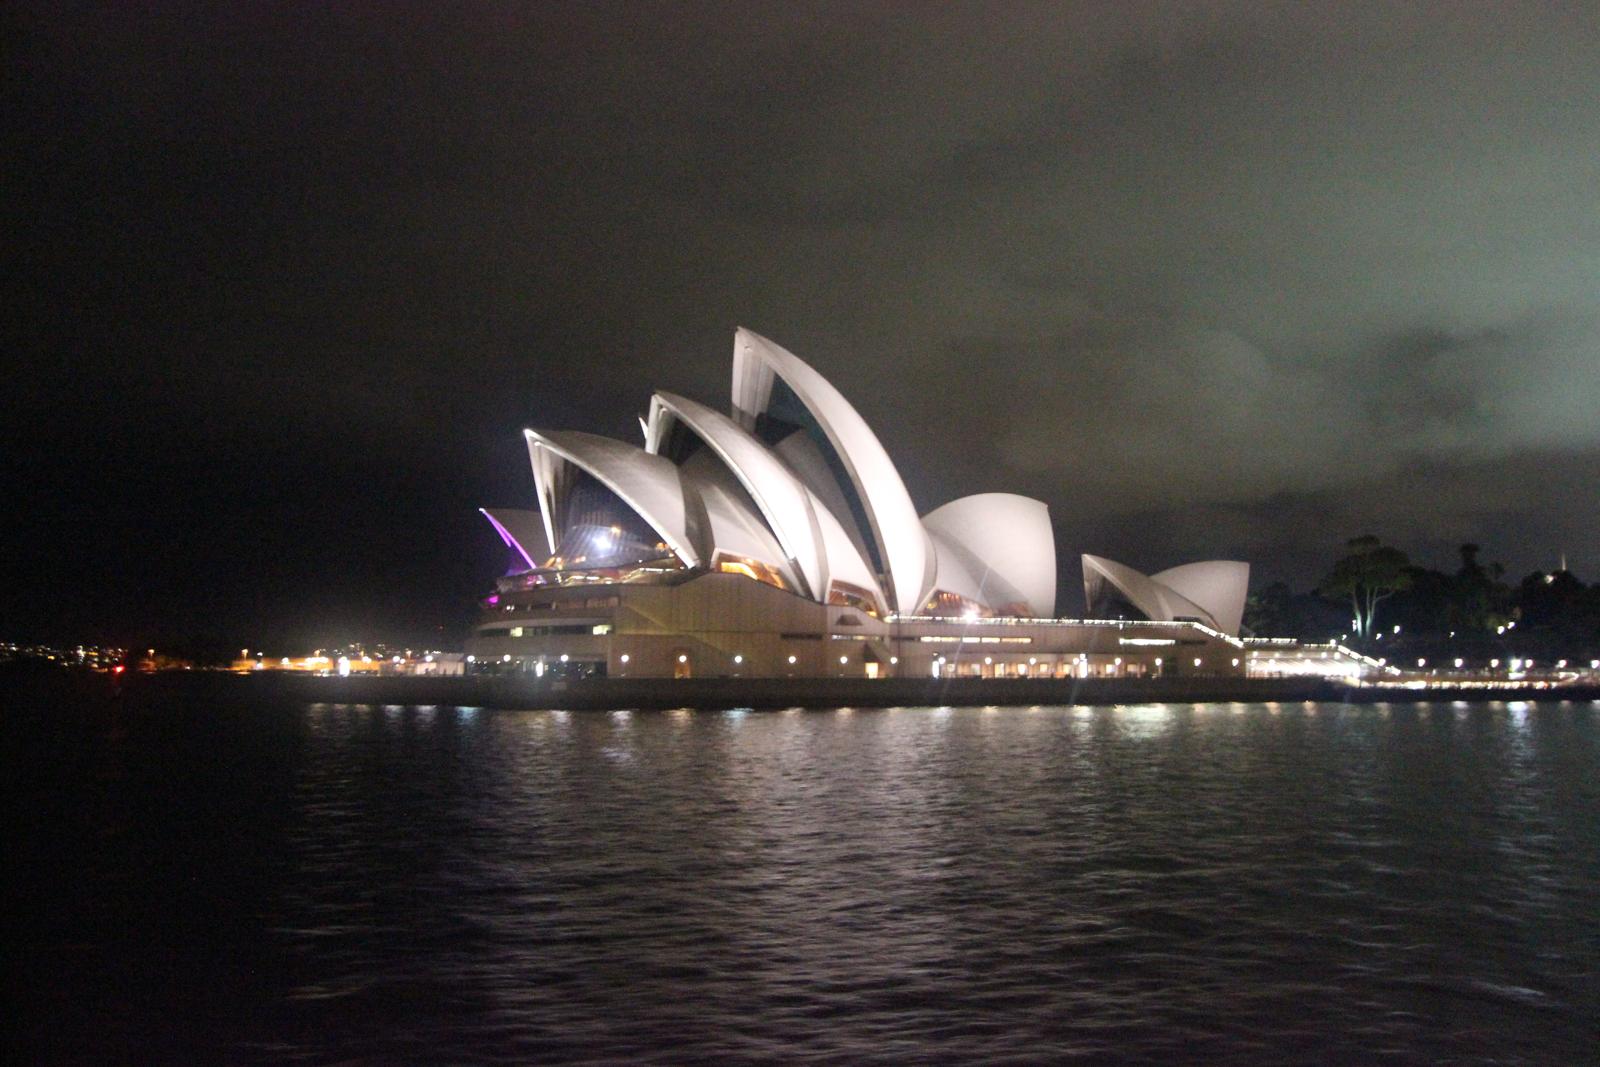 The Opera House at Night